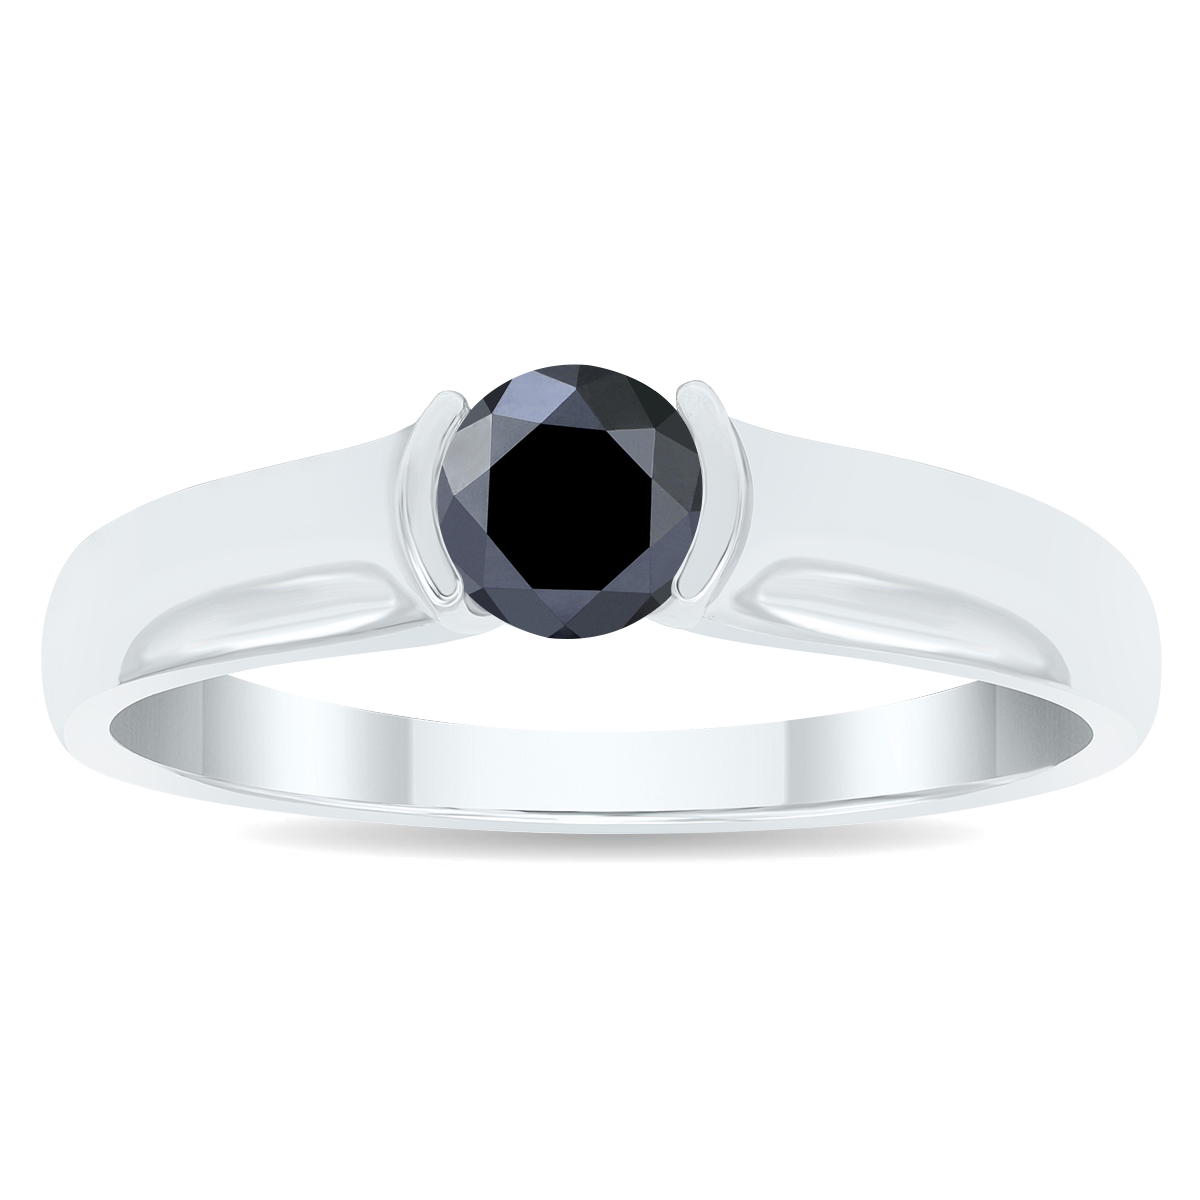 1/2 Carat Half Bezel Black Diamond Solitaire Ring in 10K White Gold